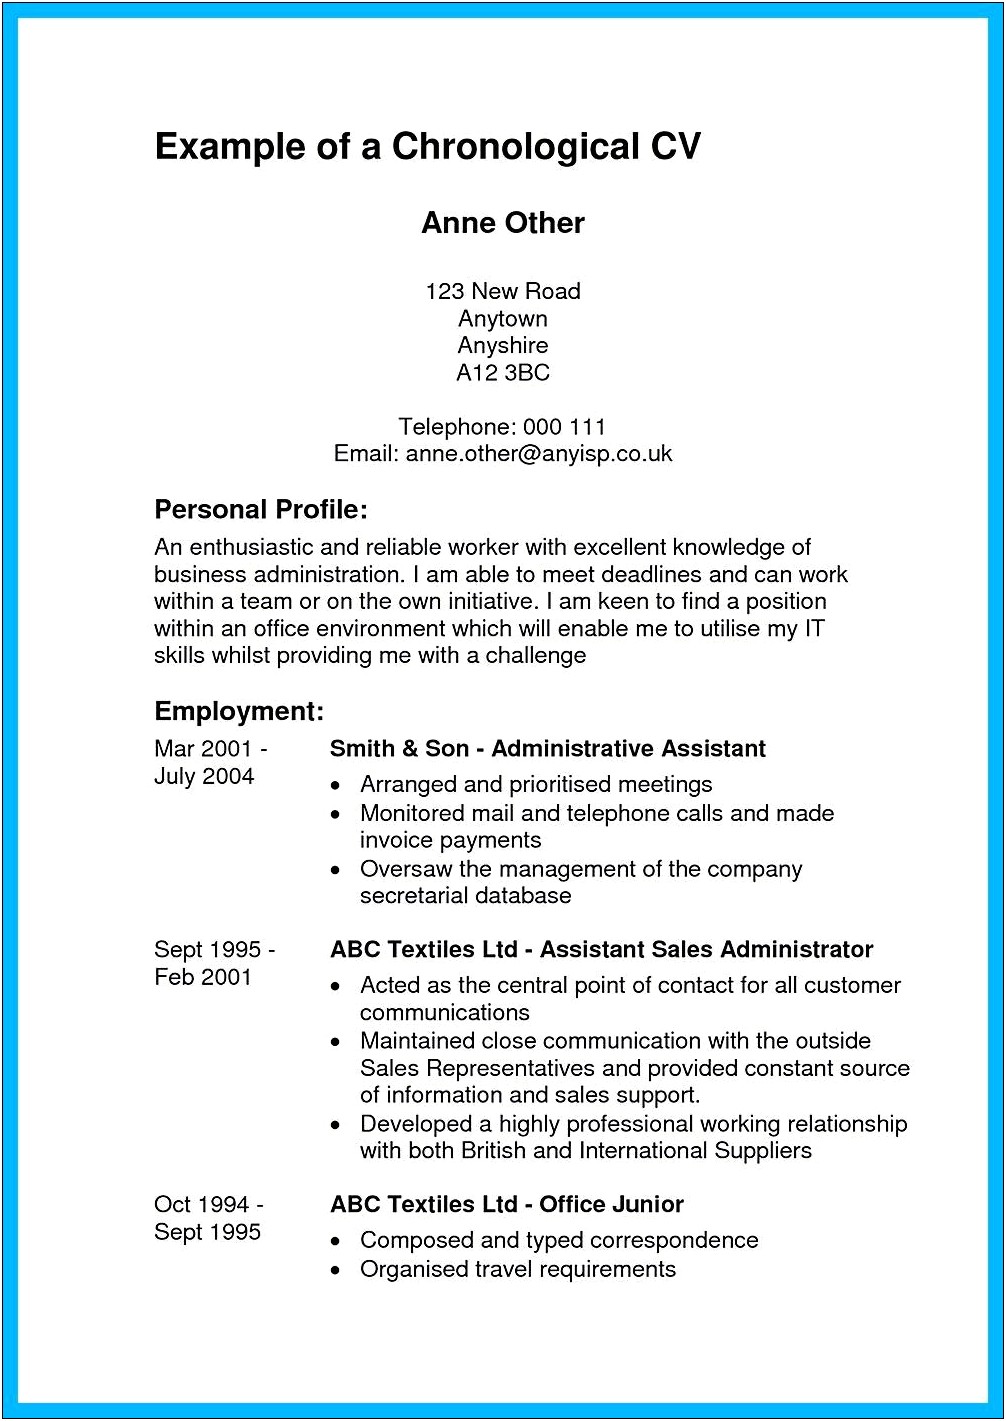 Sales Administrator Job Description Resume